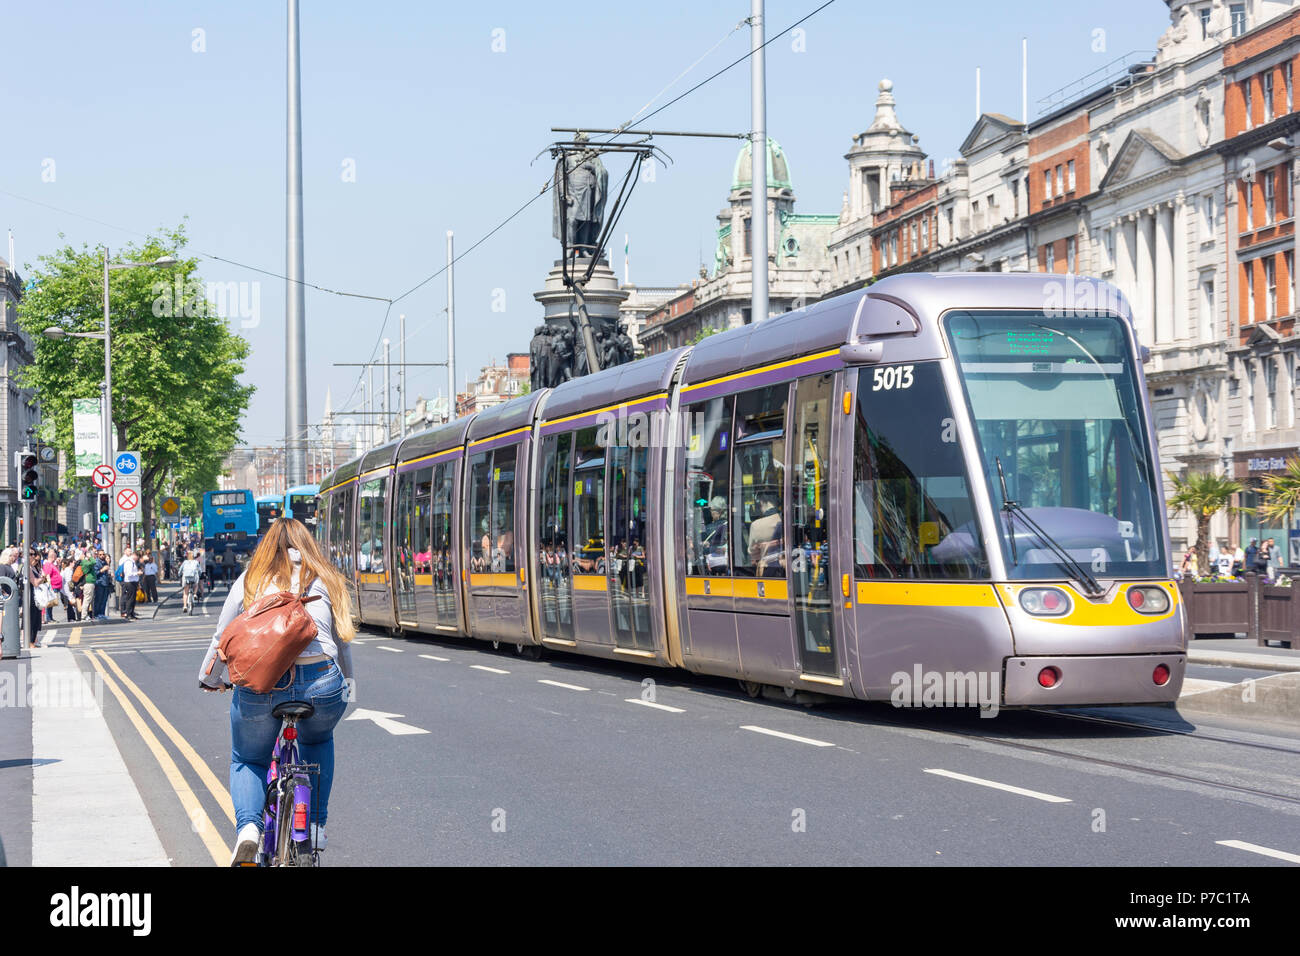 Luas tram/light rail transport system, O'Connell Bridge, Dublin, Republic of Ireland Stock Photo